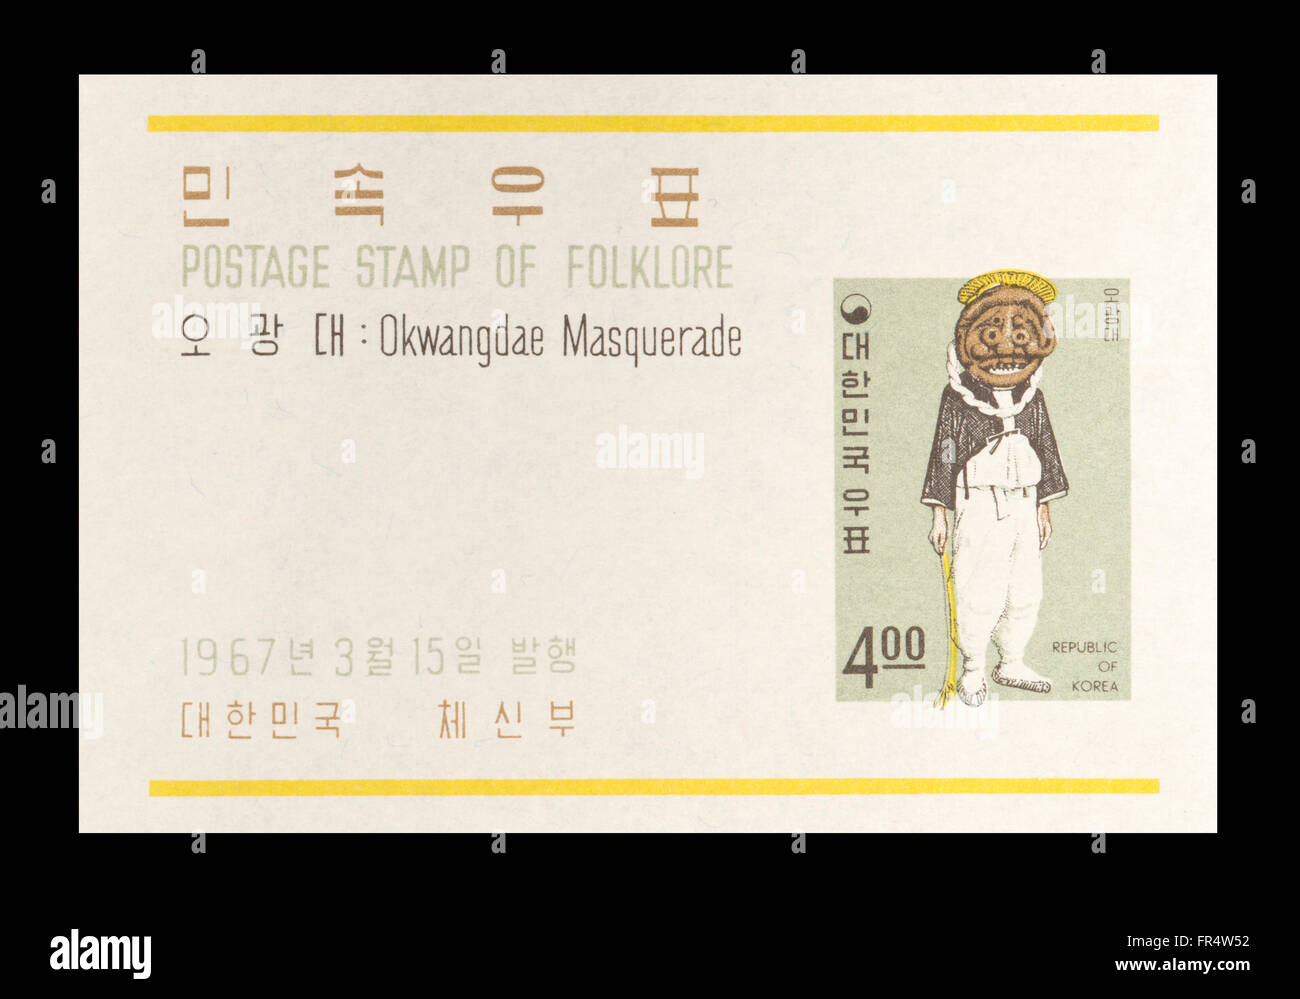 Souvenir sheet from South Korea depicting an Okwangdae masquerade costume. Stock Photo